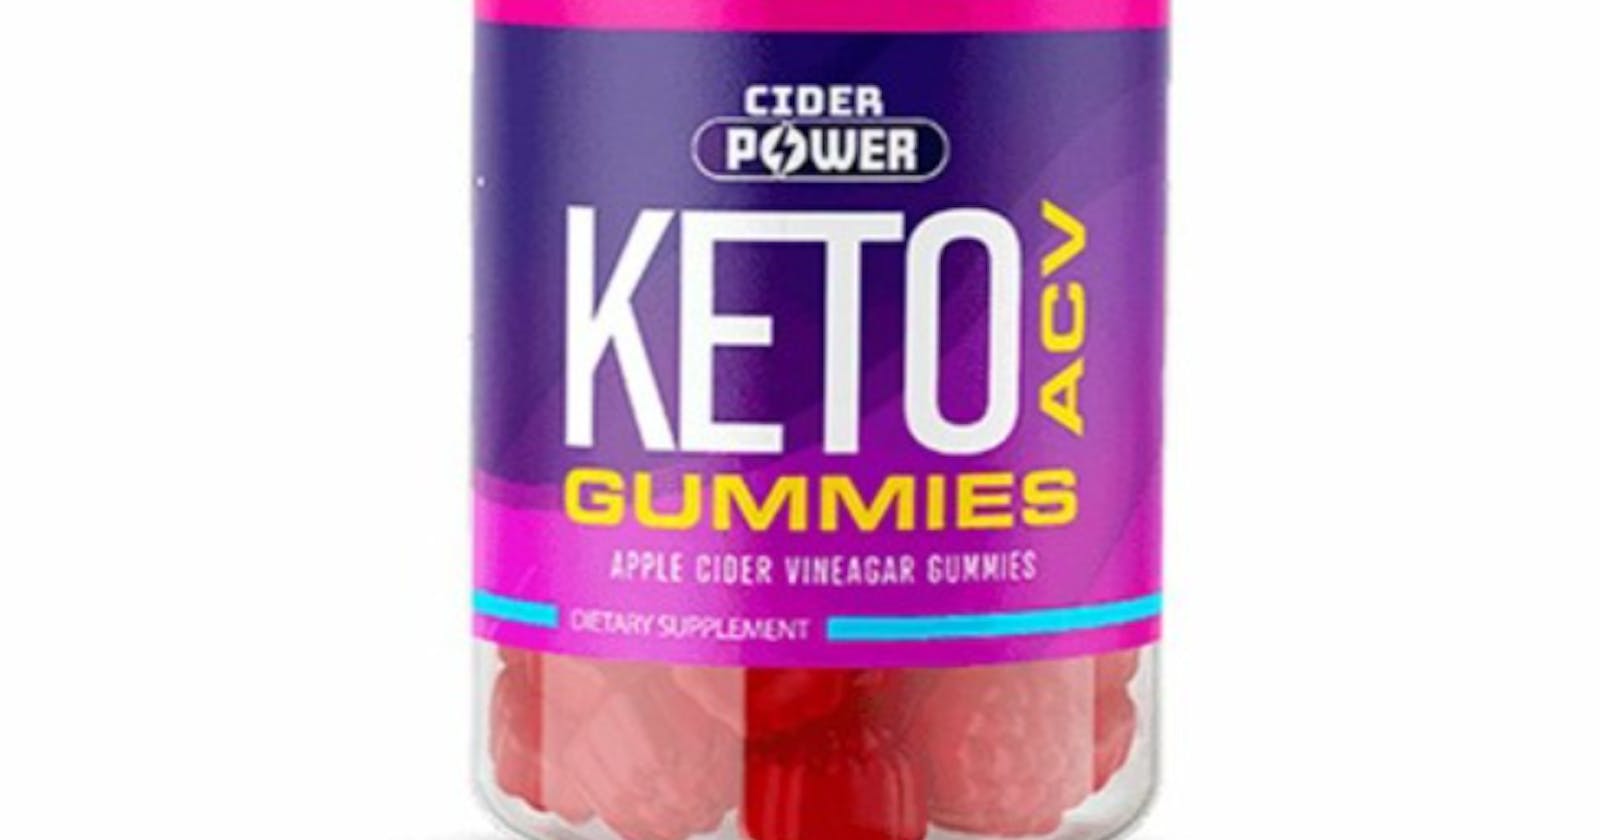 Cidar Power Keto ACV Gummies Weight Loss Reviews?